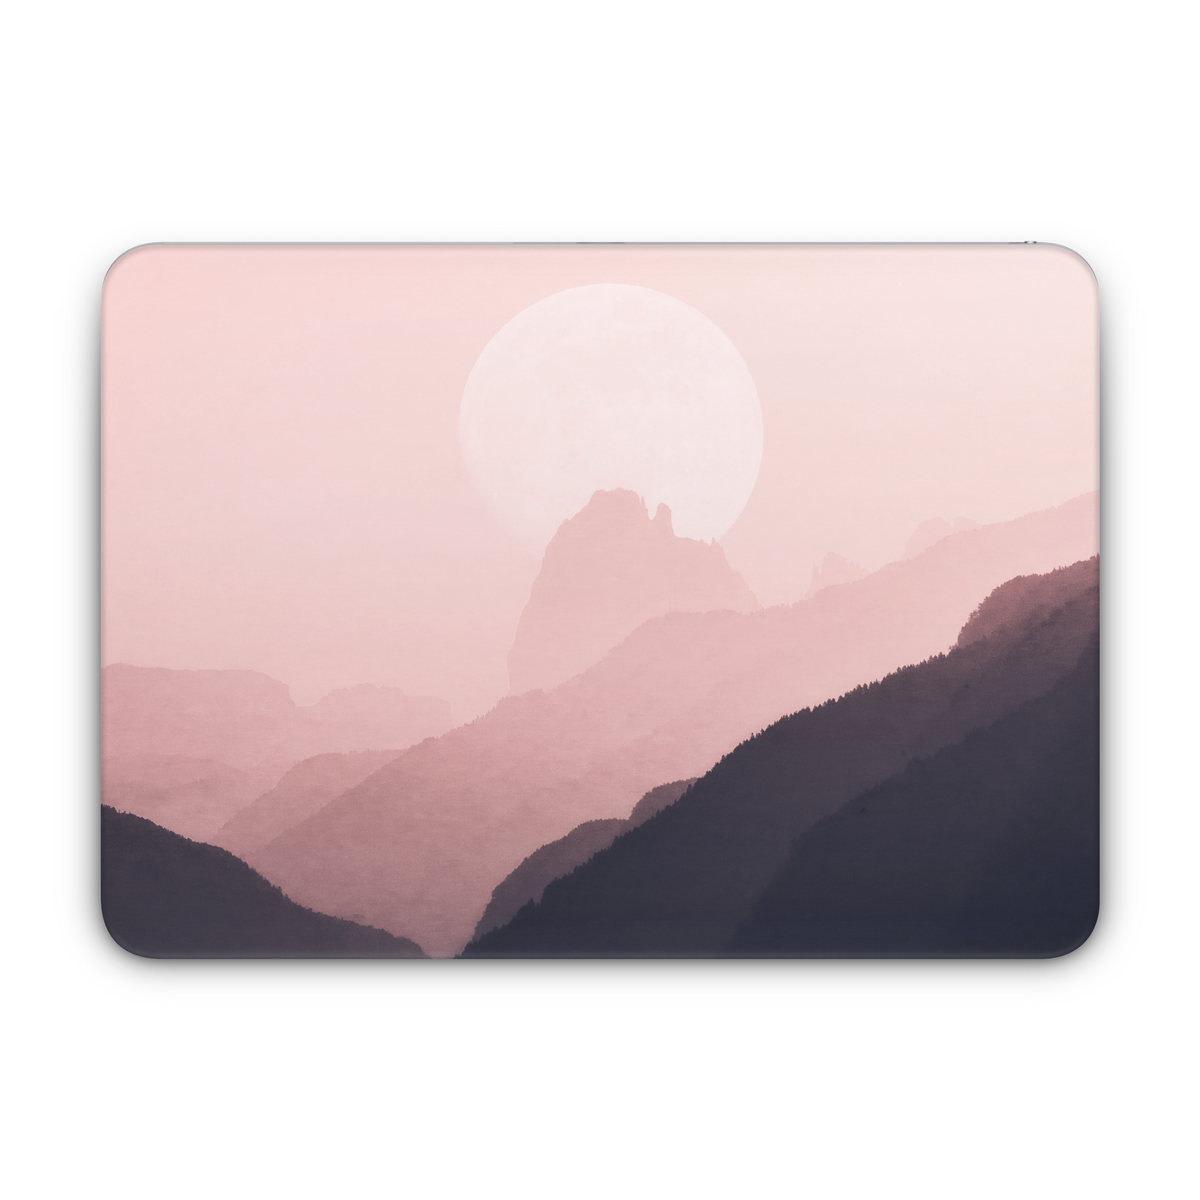 Eclipse (Magic Trackpad)